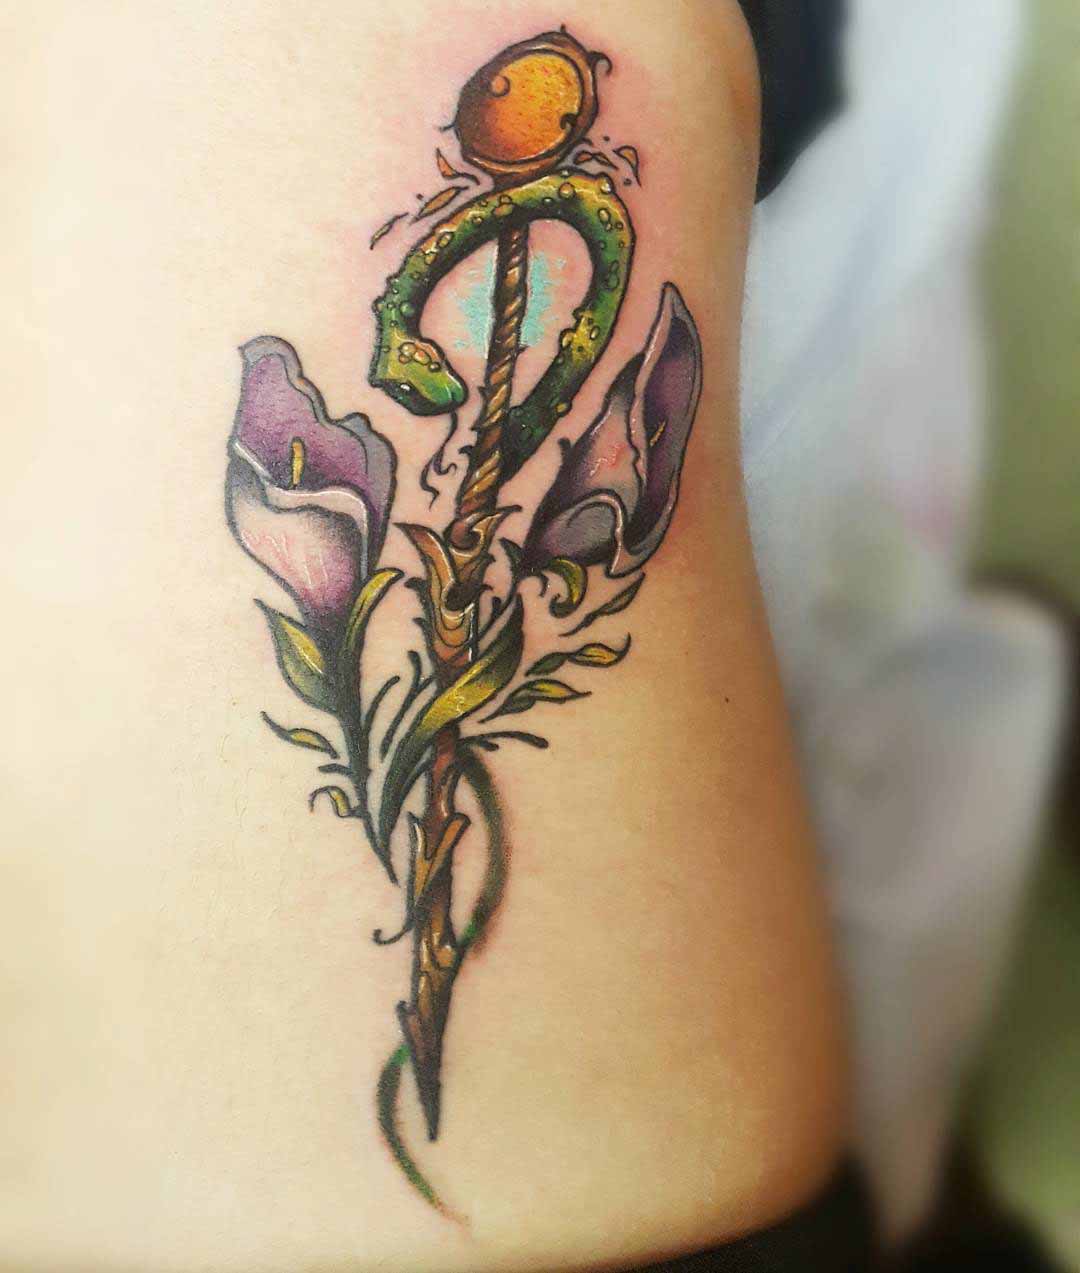 Rod of Asclepius sidee tattoo